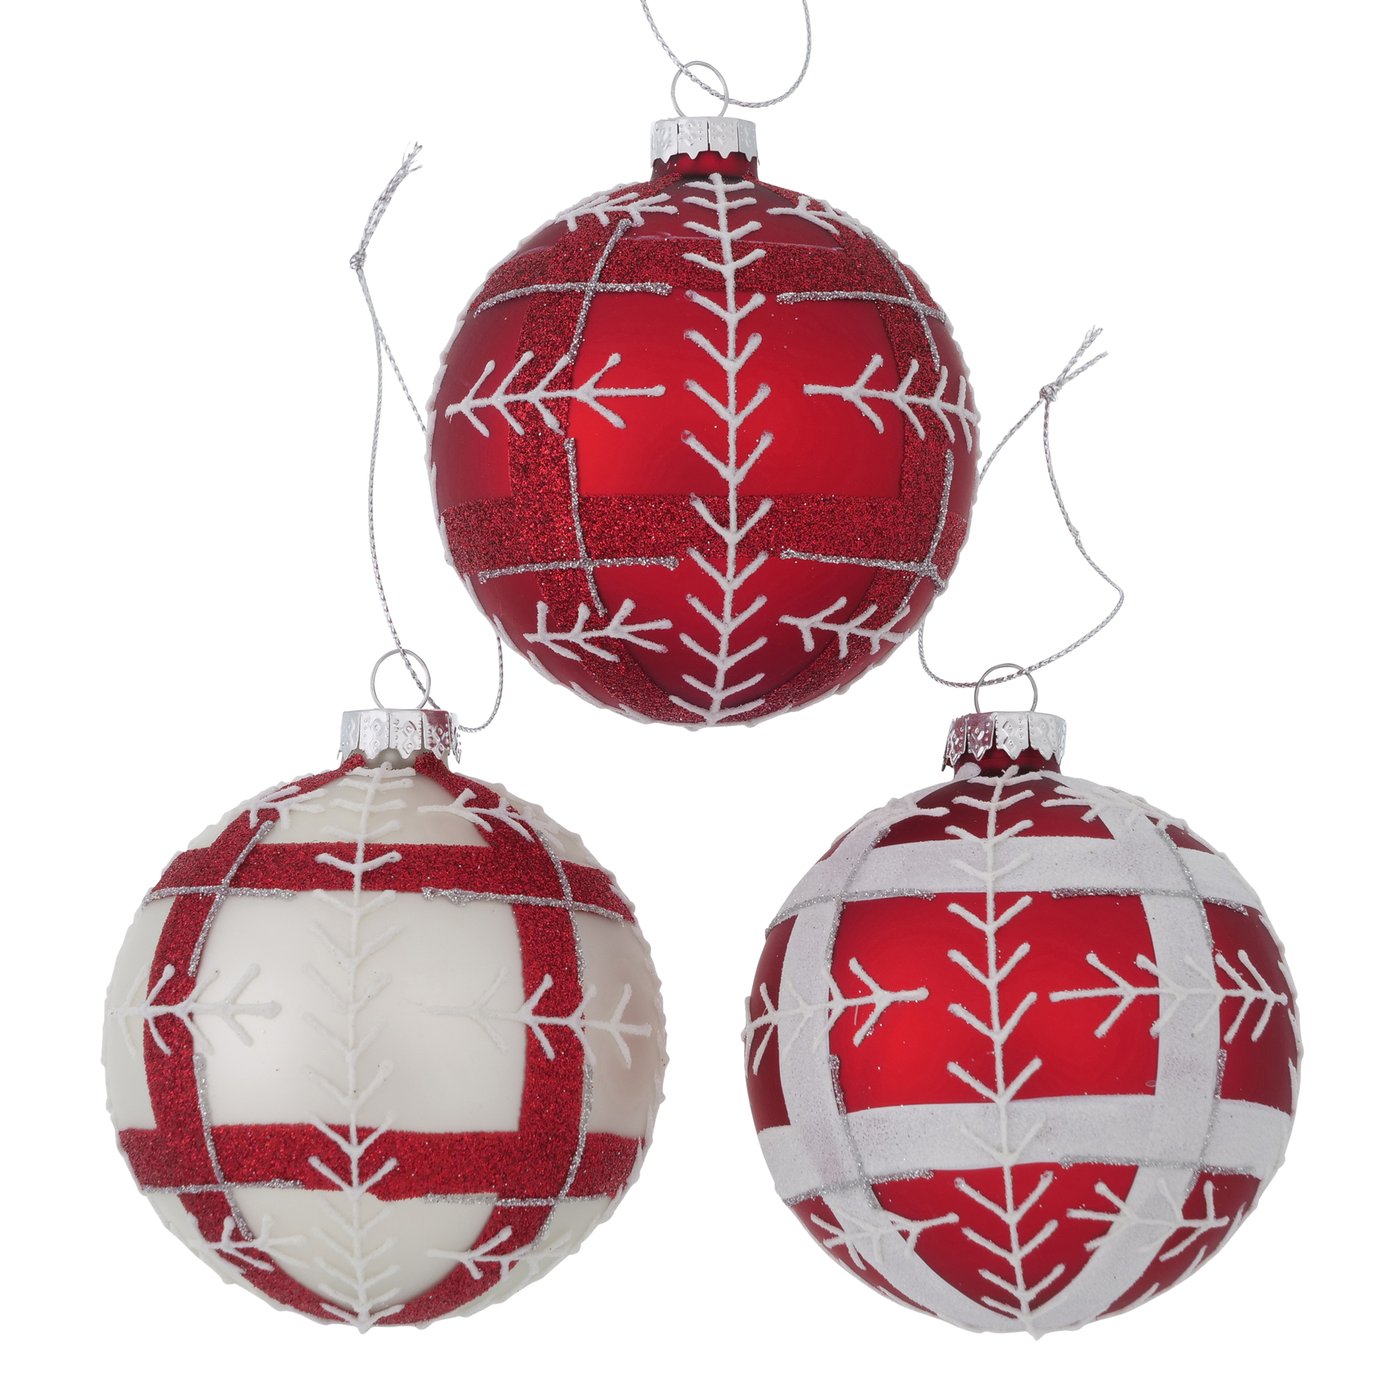 Glas Weihnachtskugel "Bodil" rot weiß kariert 12er Set - D 8cm, 2012029, 4020607893054, Boltze